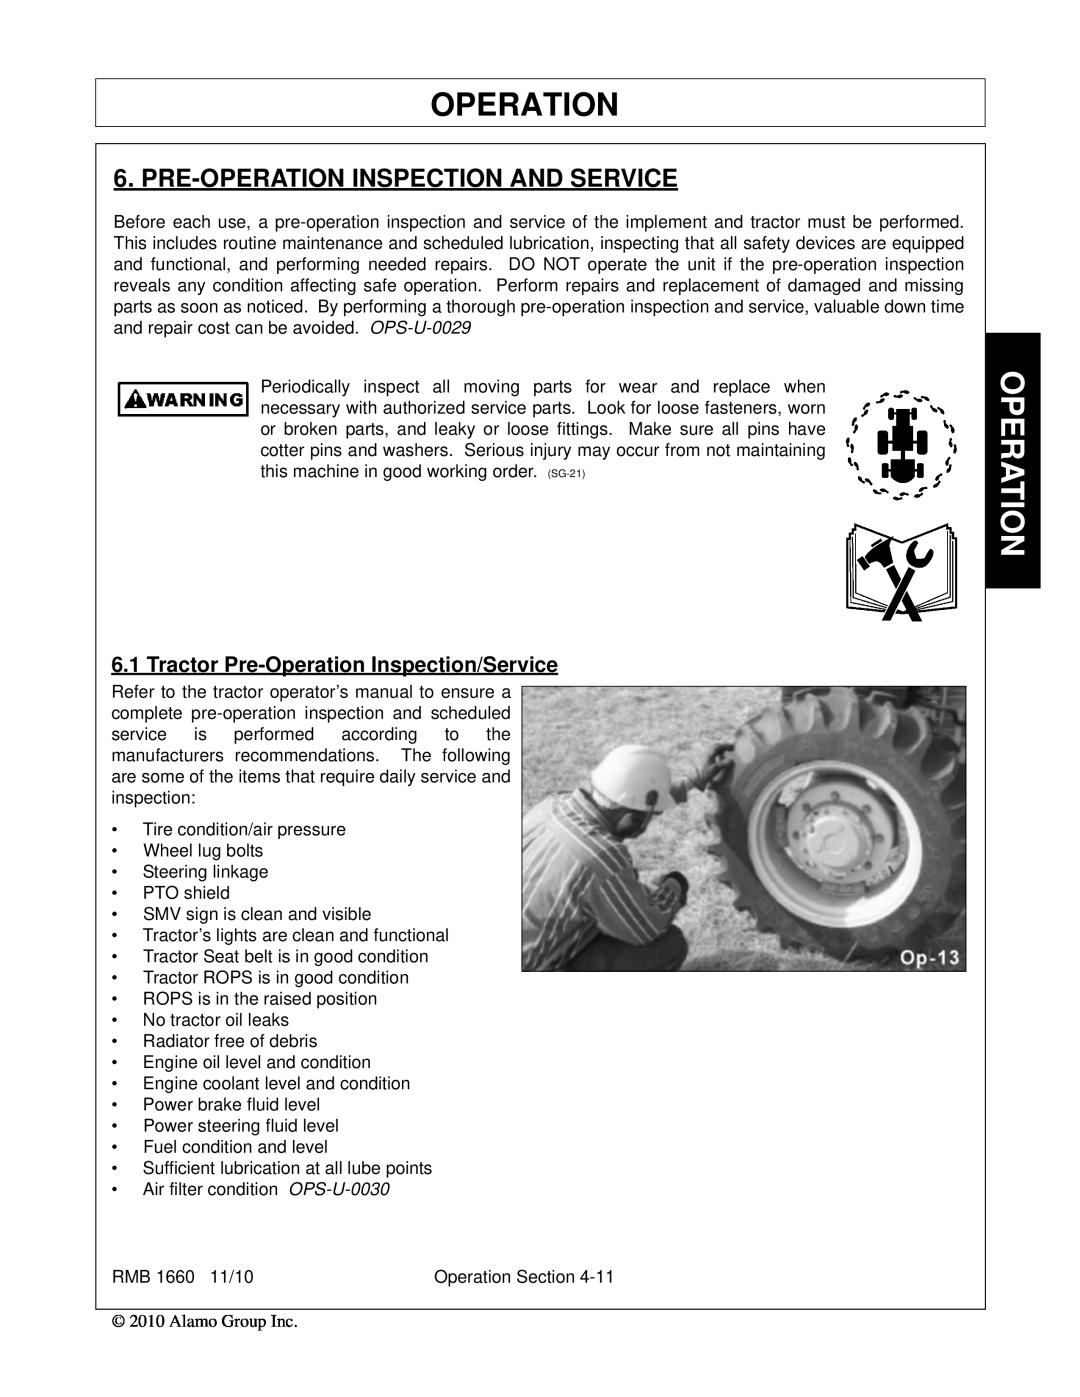 Bush Hog RMB 1660 manual Pre-Operation Inspection And Service, Tractor Pre-Operation Inspection/Service 